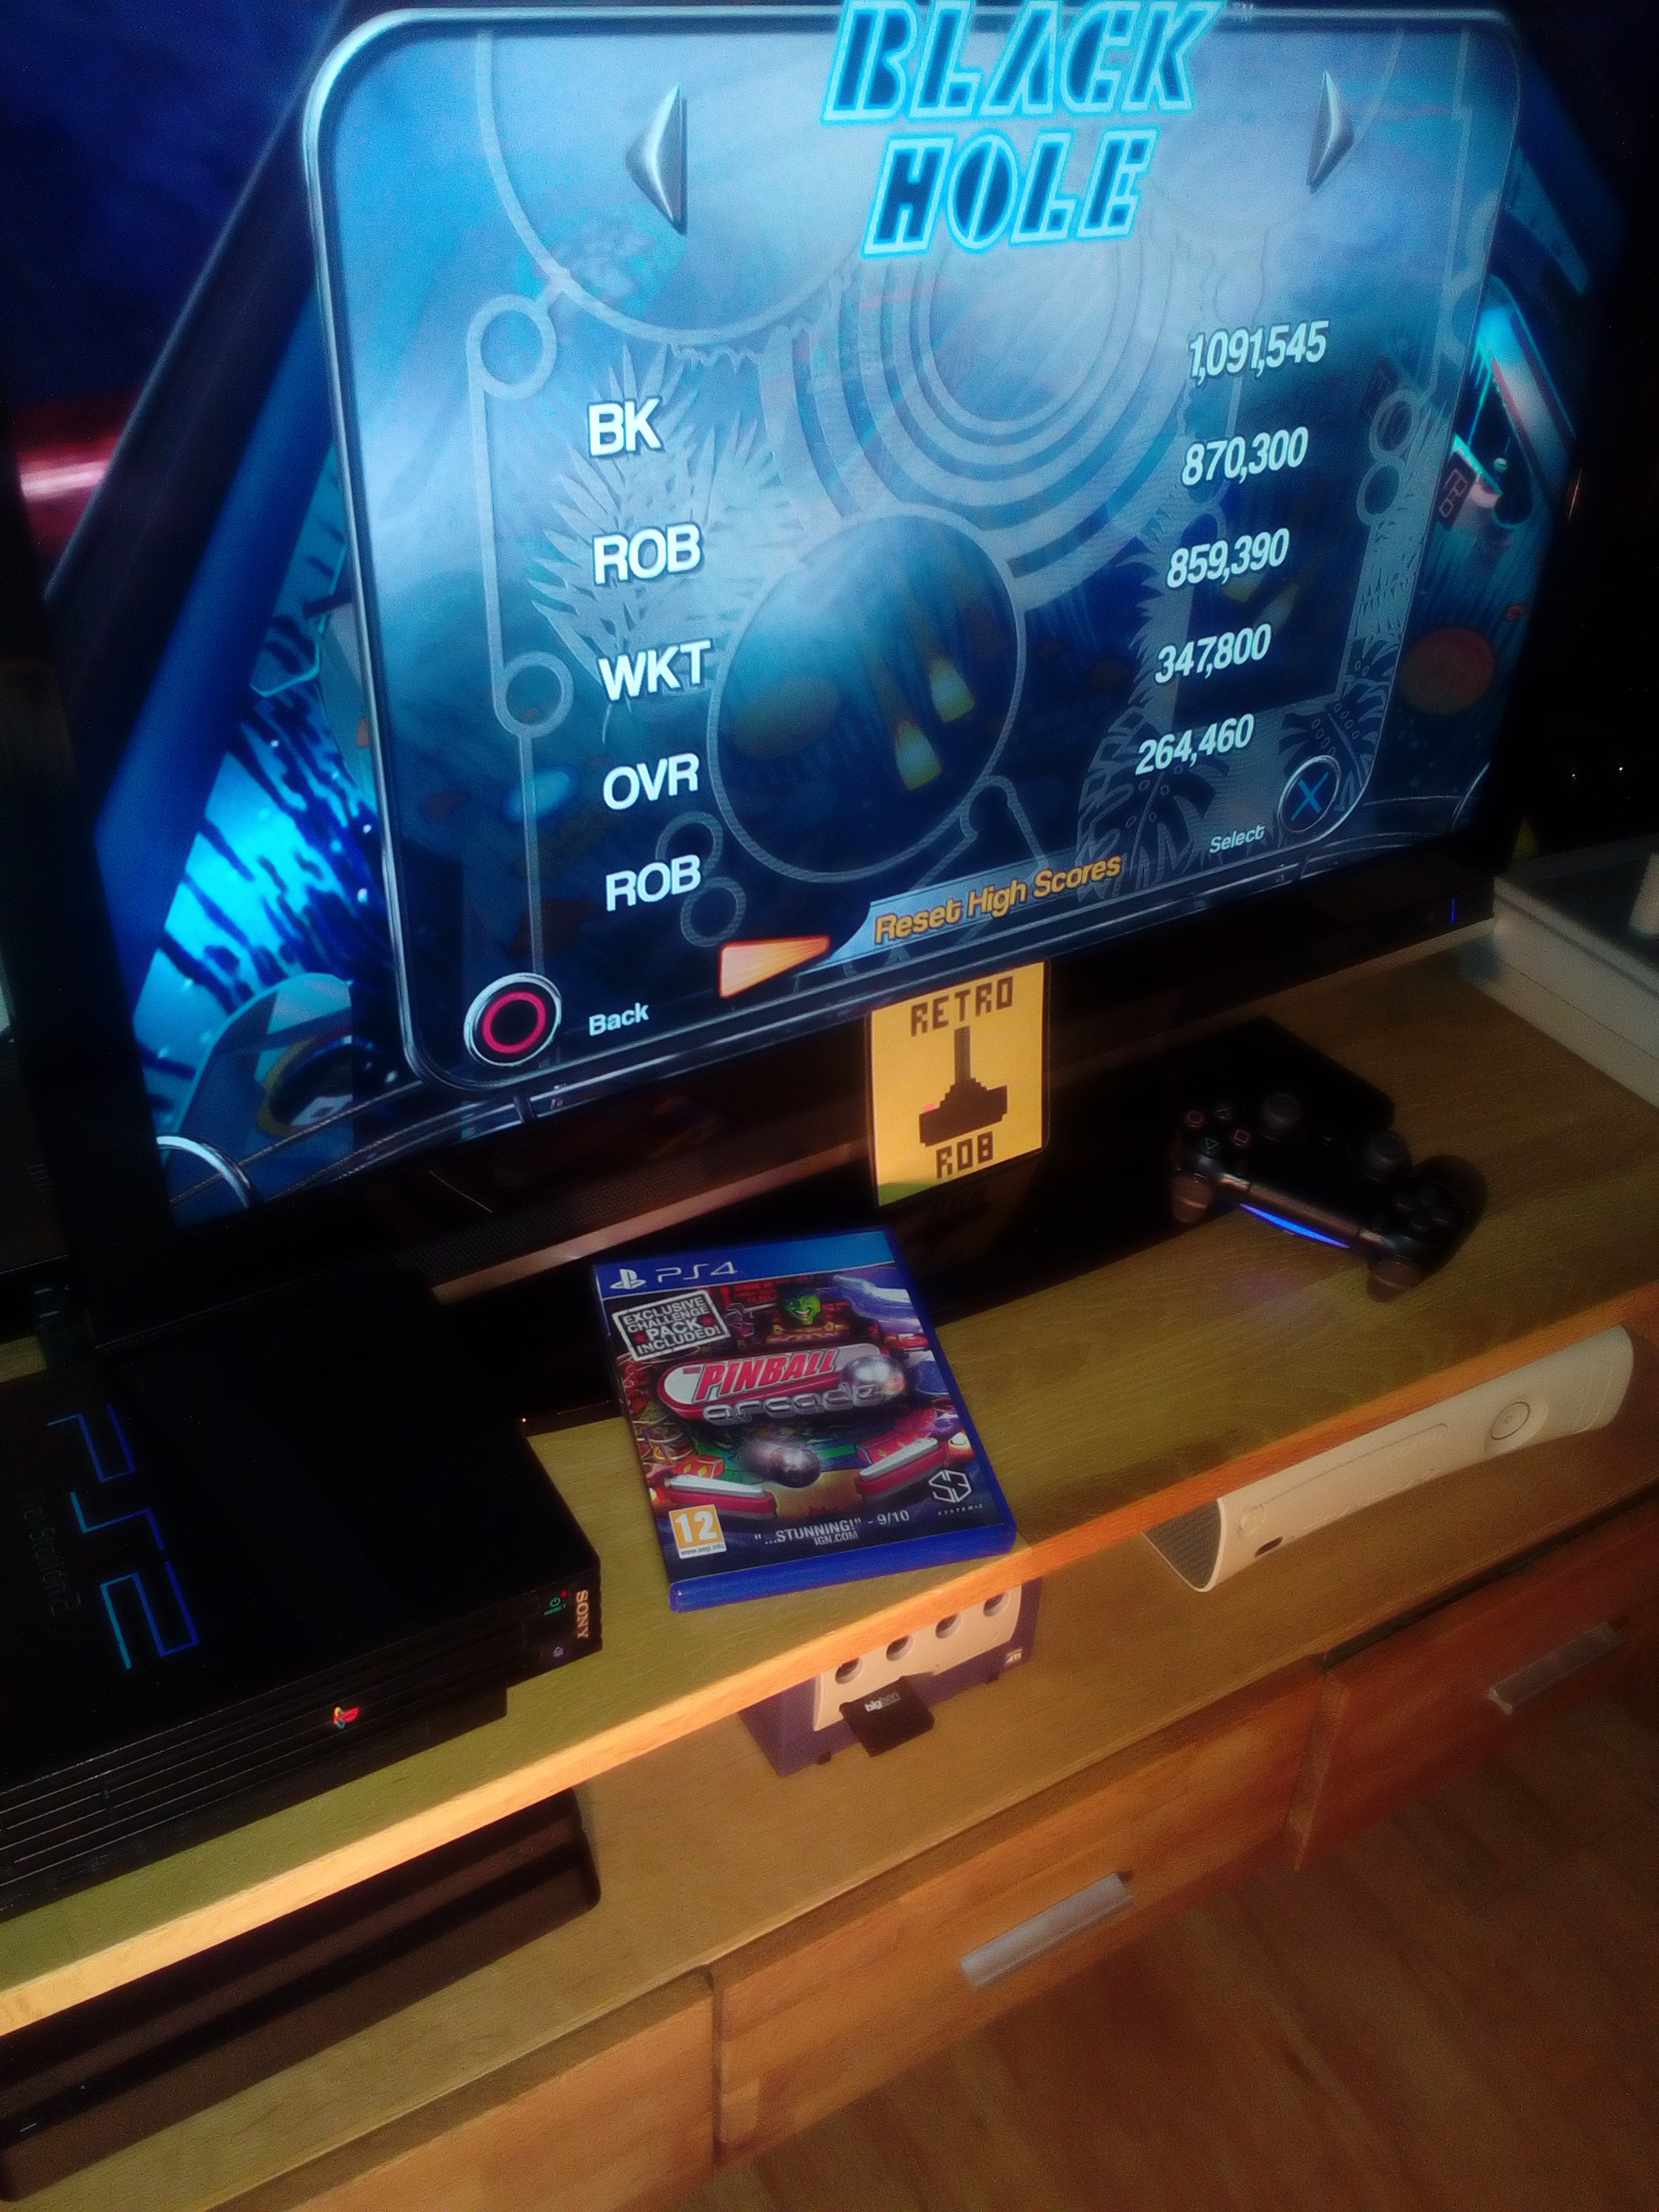 RetroRob: Pinball Arcade: Black Hole (Playstation 4) 870,300 points on 2019-10-16 14:12:22